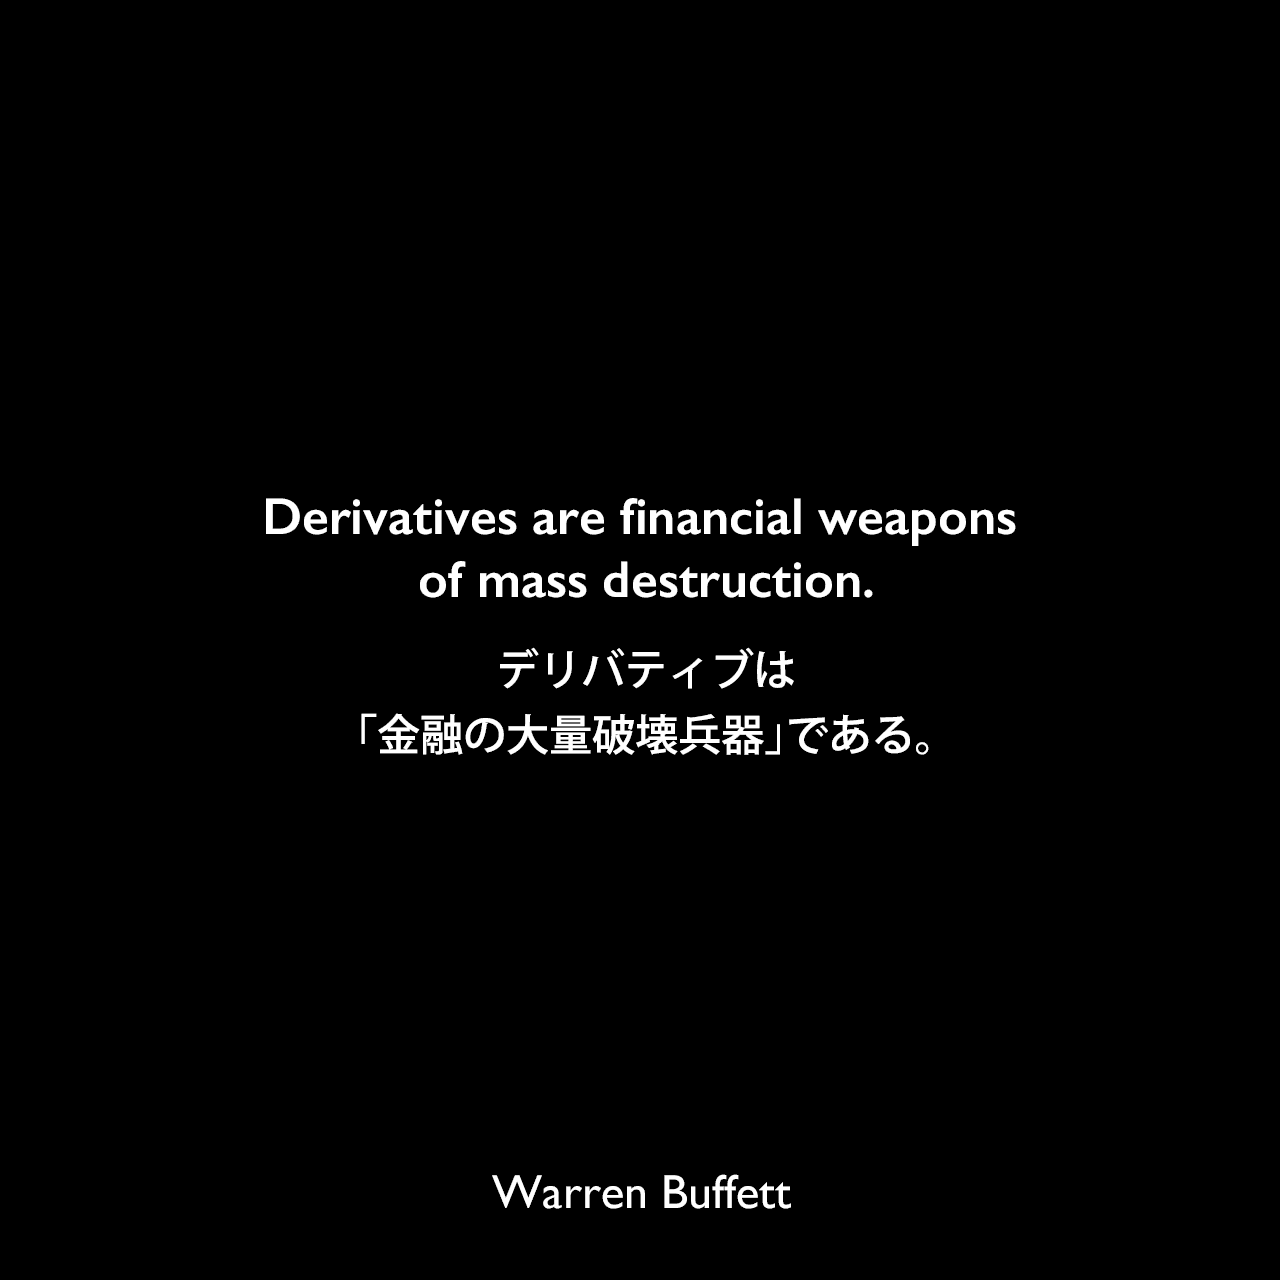 Derivatives are financial weapons of mass destruction.デリバティブは「金融の大量破壊兵器」である。Warren Buffett